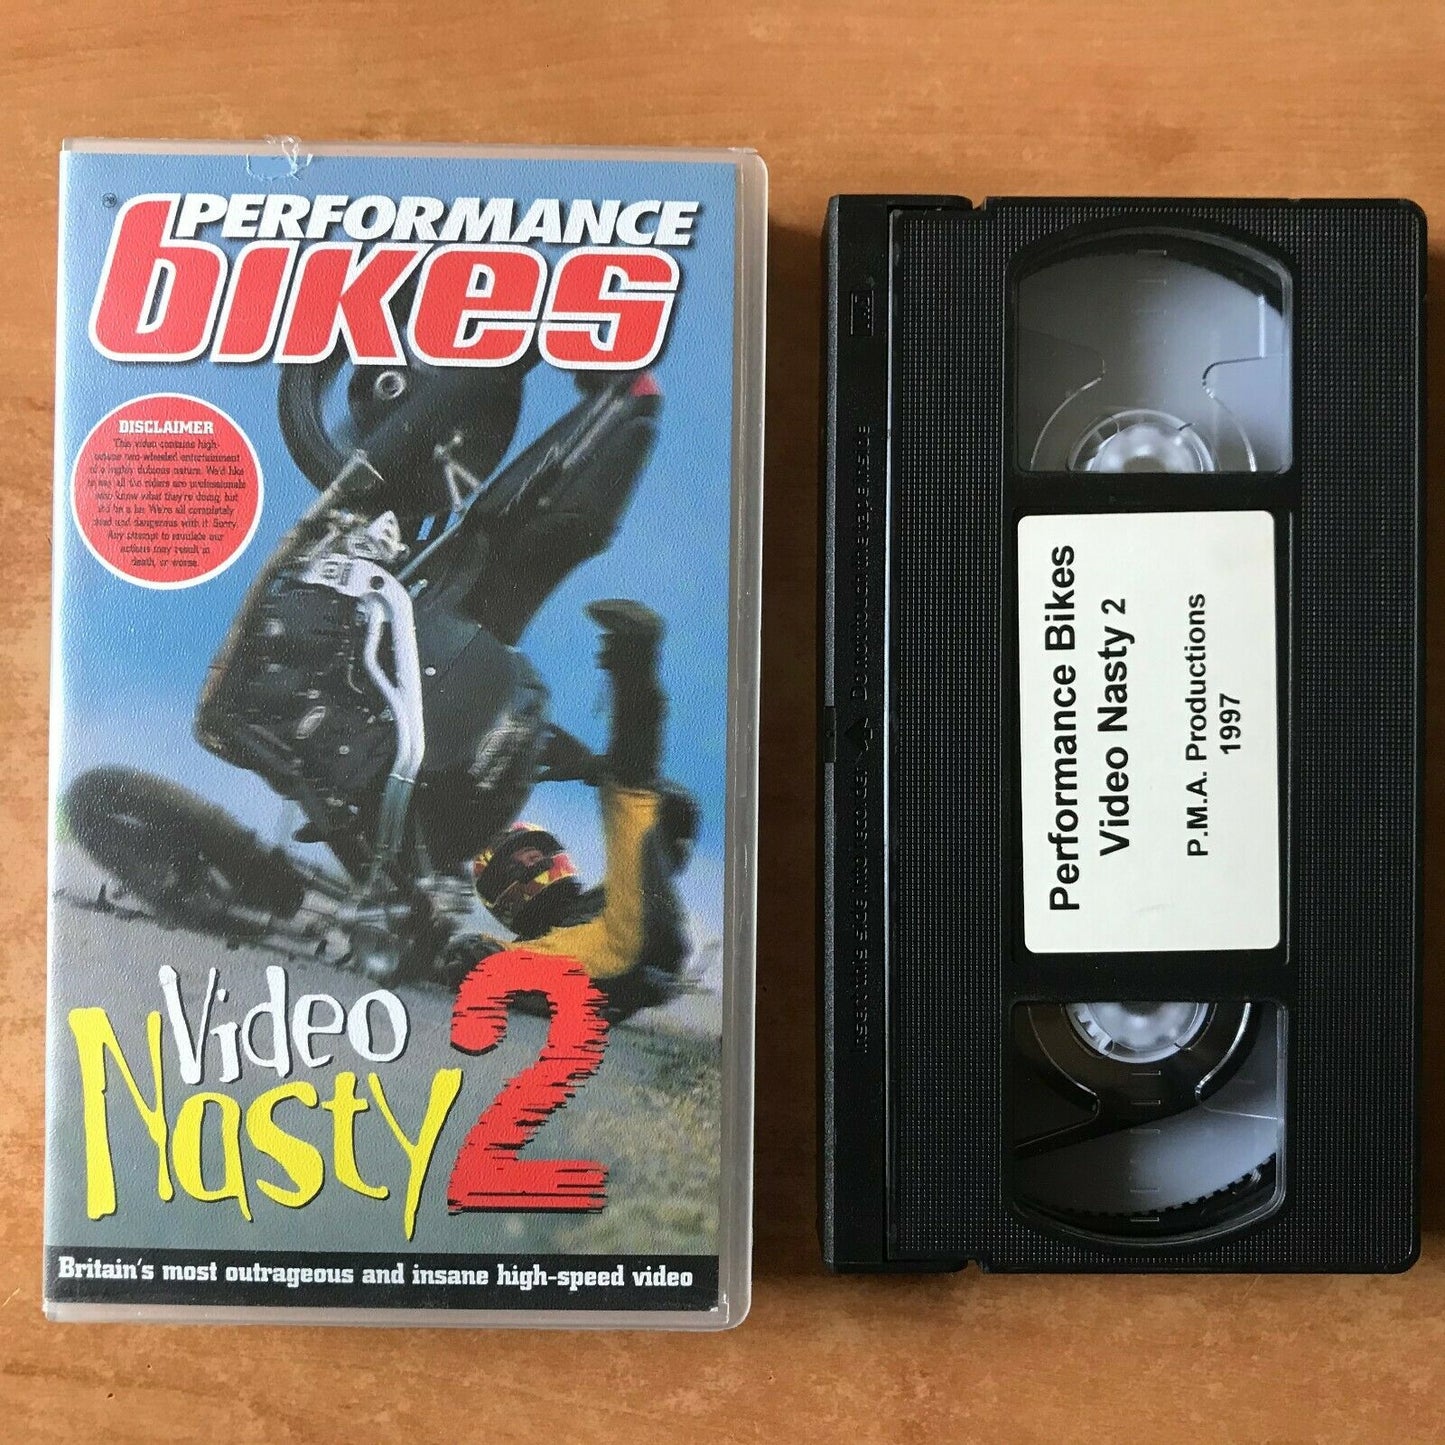 Performance Bikes: Video Nasty 2 - Motorsports - Paris - BMW R1 100R - Pal VHS-